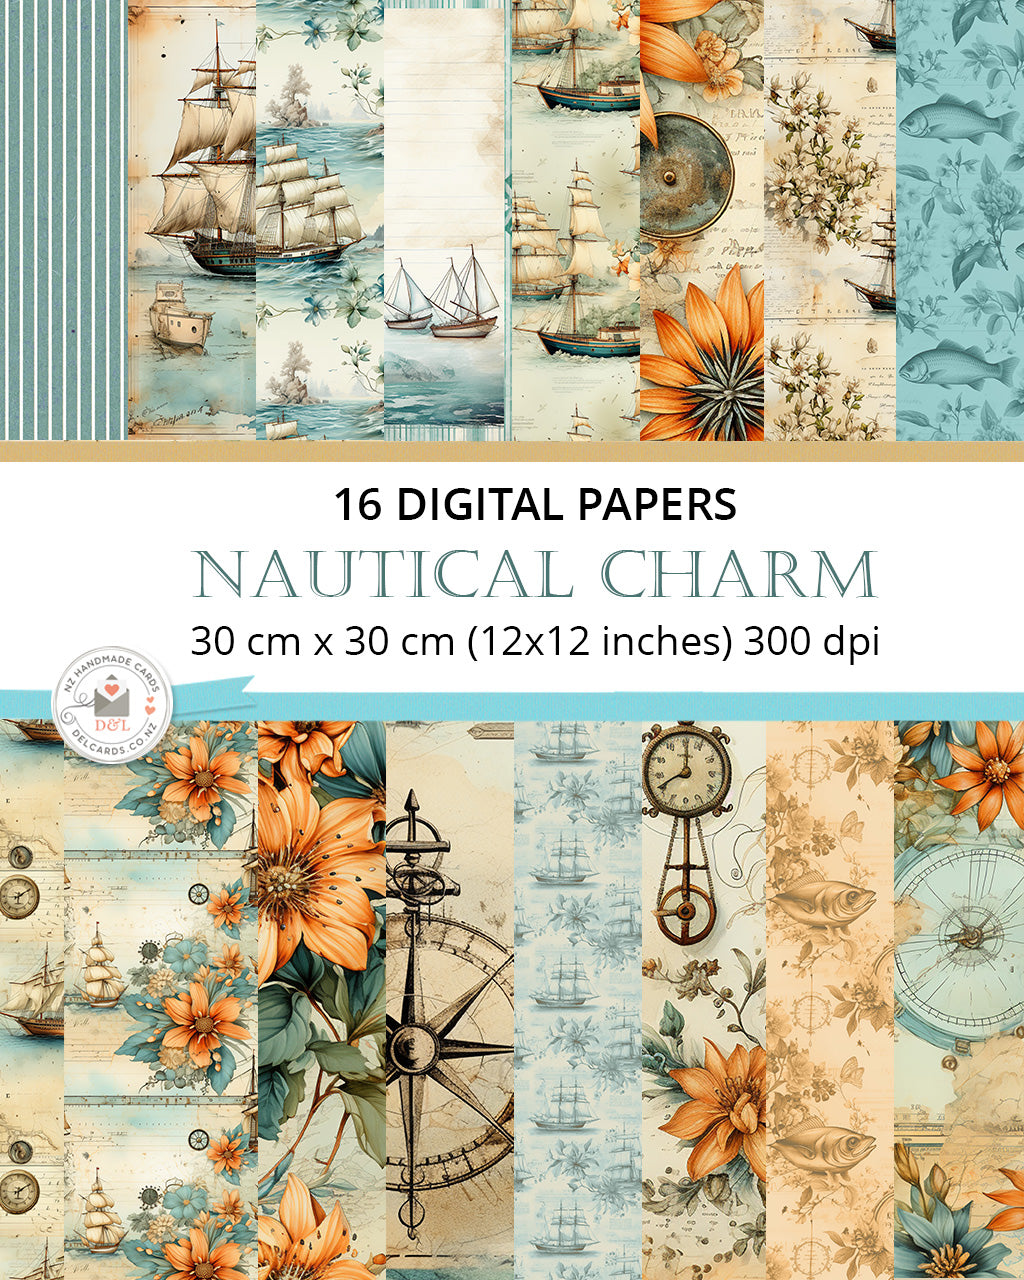 16 Digital Papers - Nautical Charm